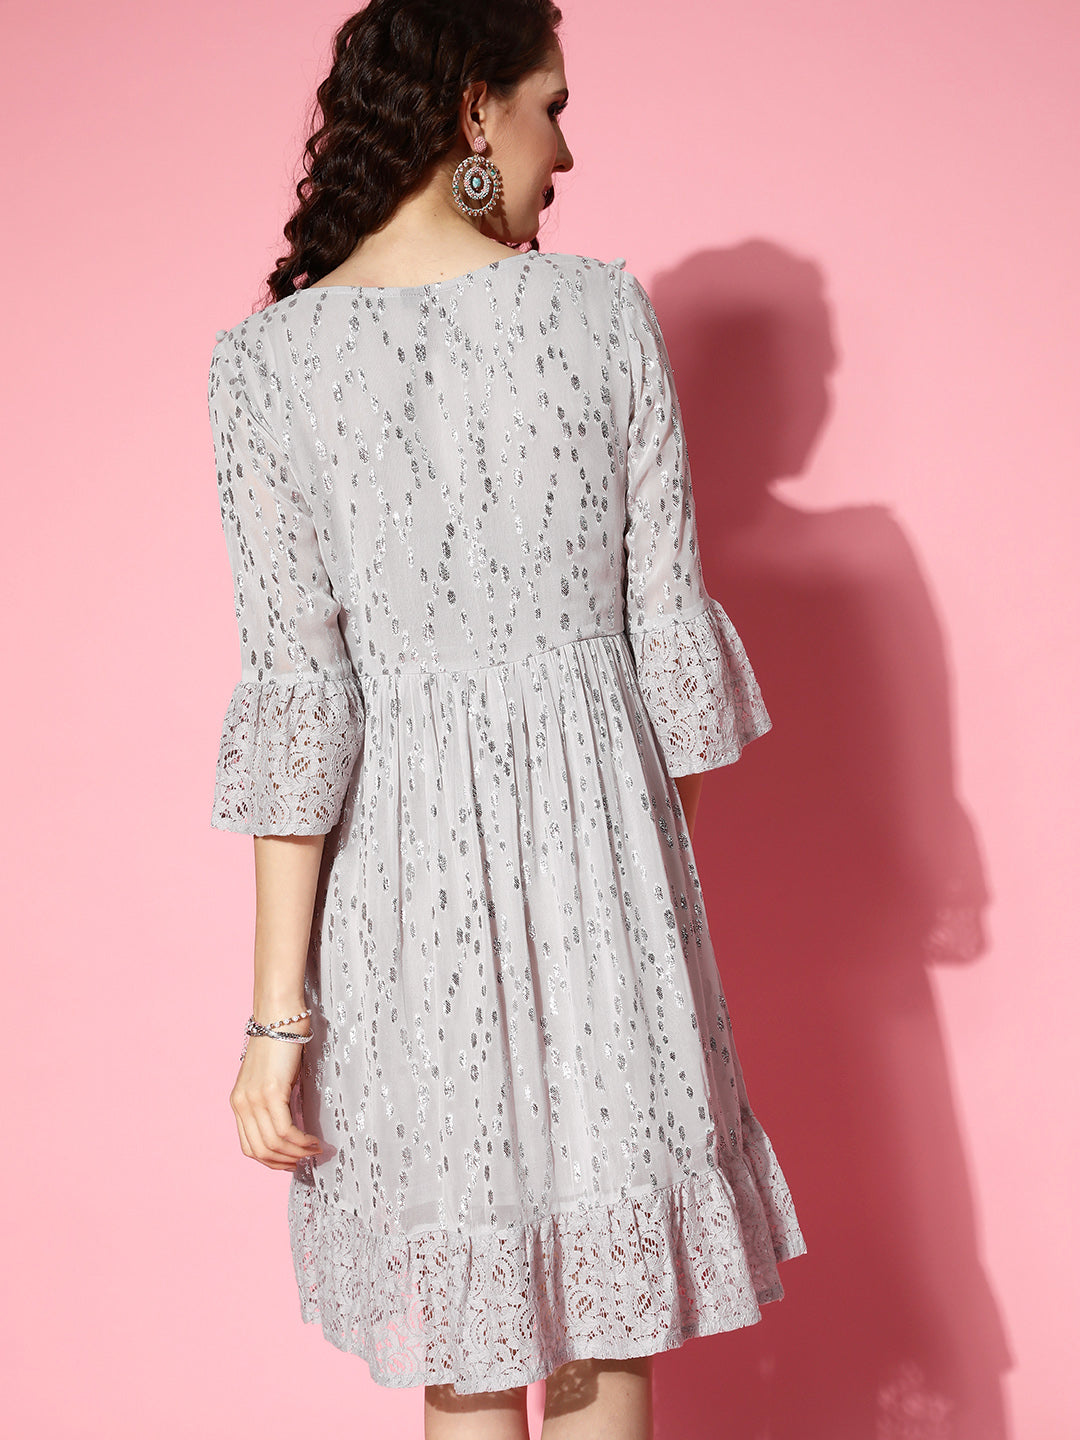 Ishin Women's Grey Embellished A-Line Dress